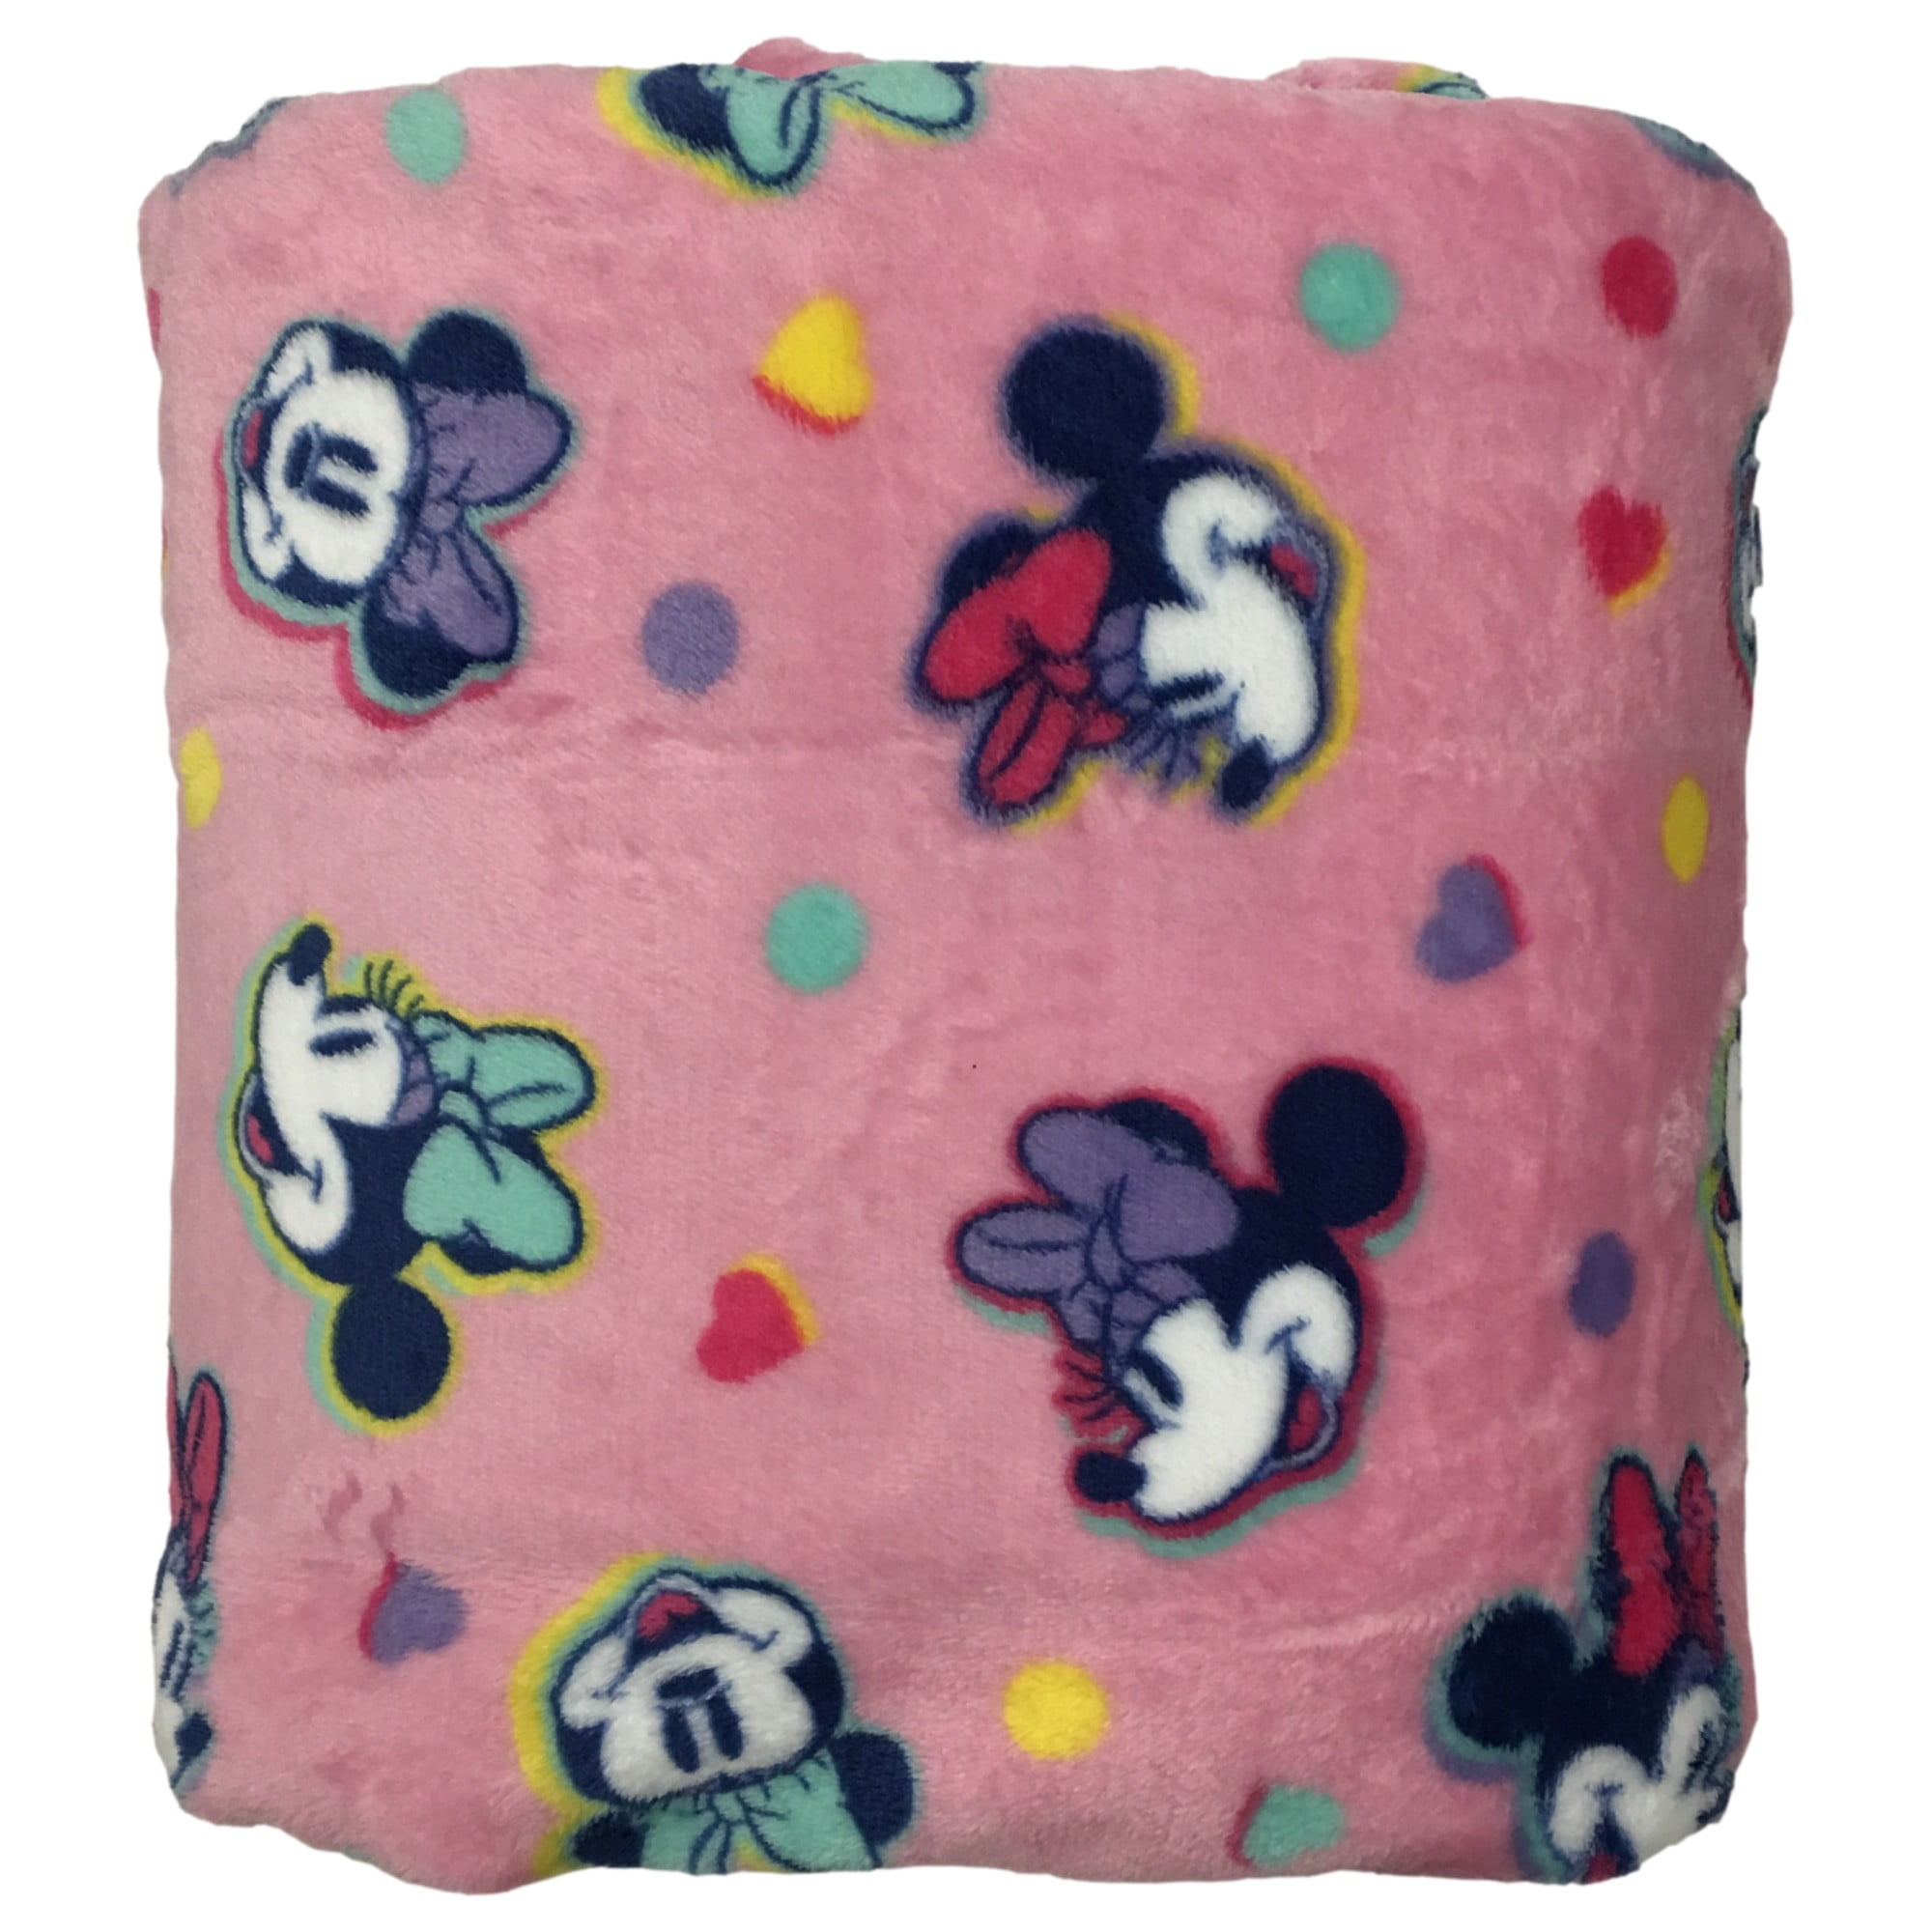 Details about   NWOT Disney Minnie Plush Throw Soft & Cozy Blanket 70 in x 48 